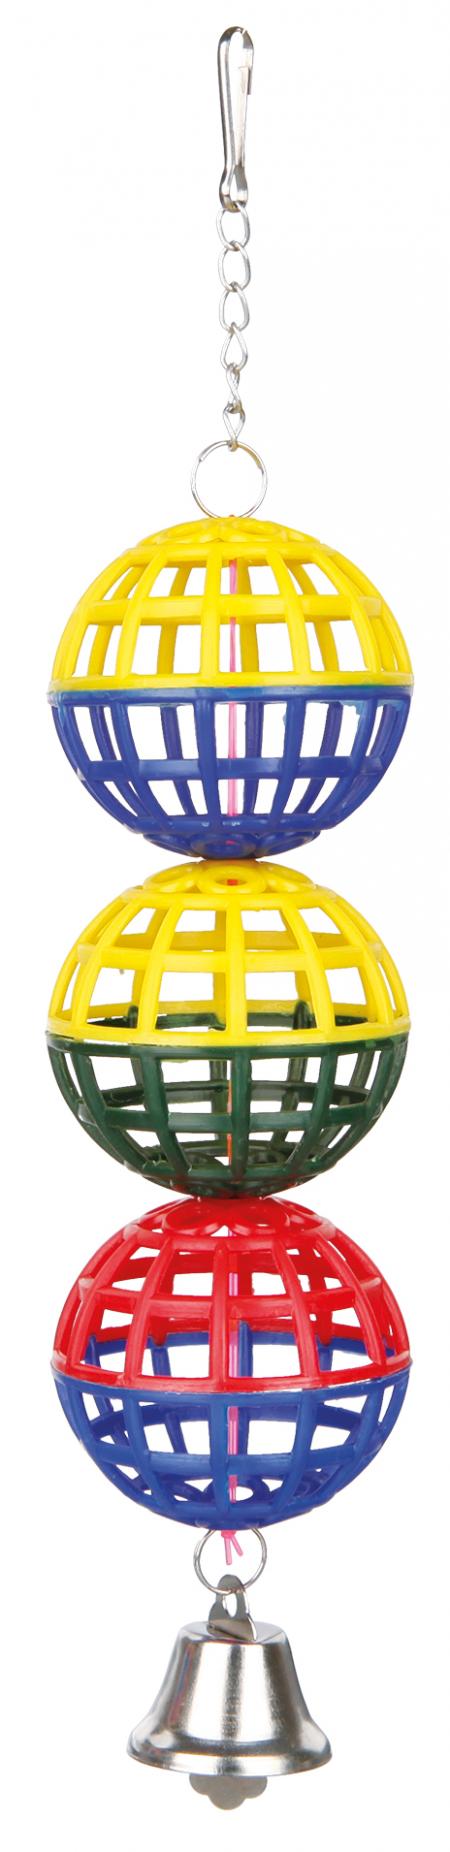 Игрушки на zoomaugli.ru TRIXIE Игрушка для попугая "Три пластиковых шарика с колокольчиком"